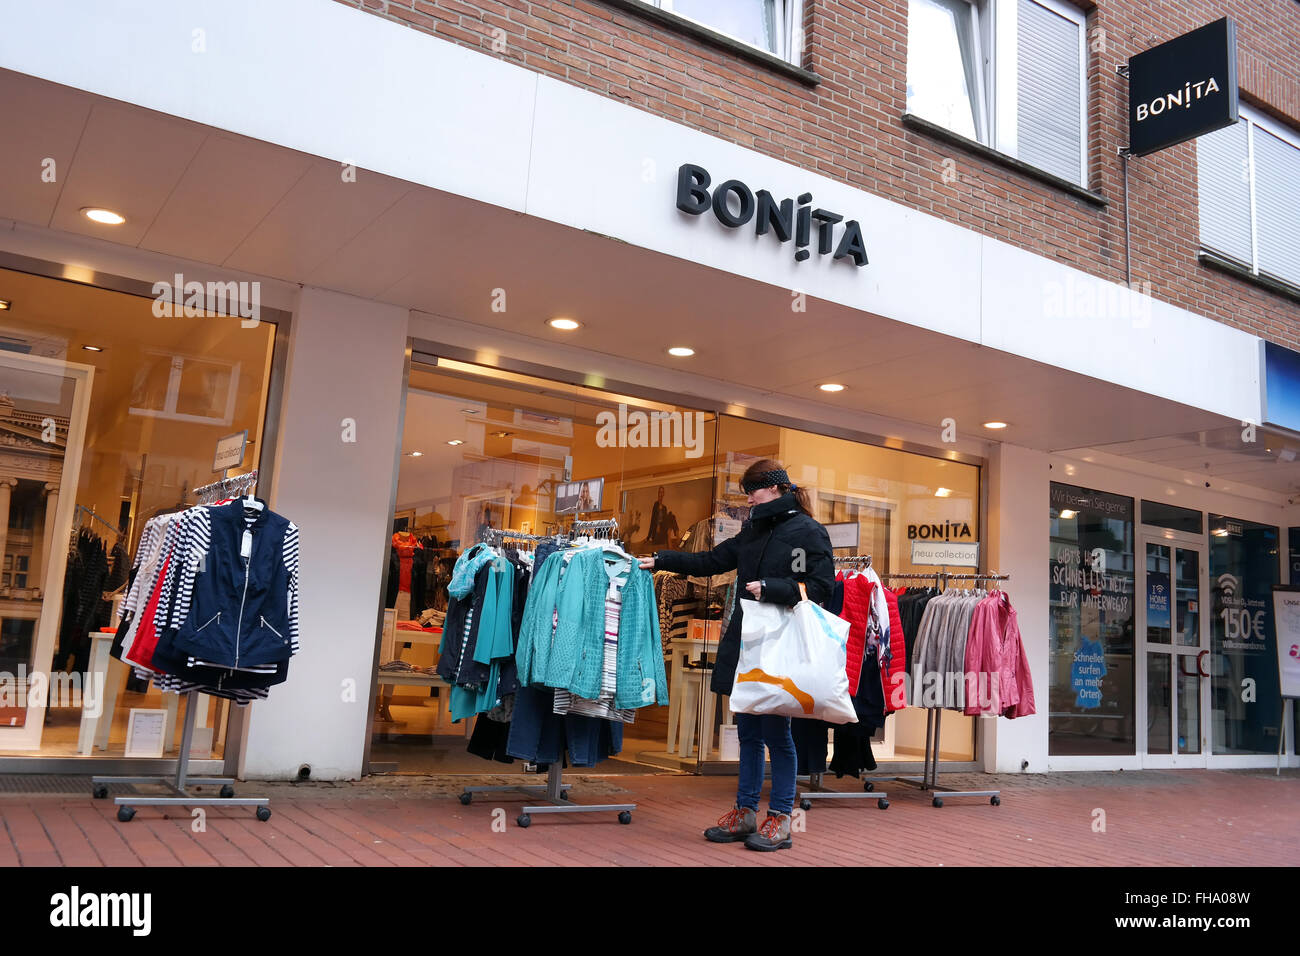 Branch of Bonita fashion store Stock Photo - Alamy